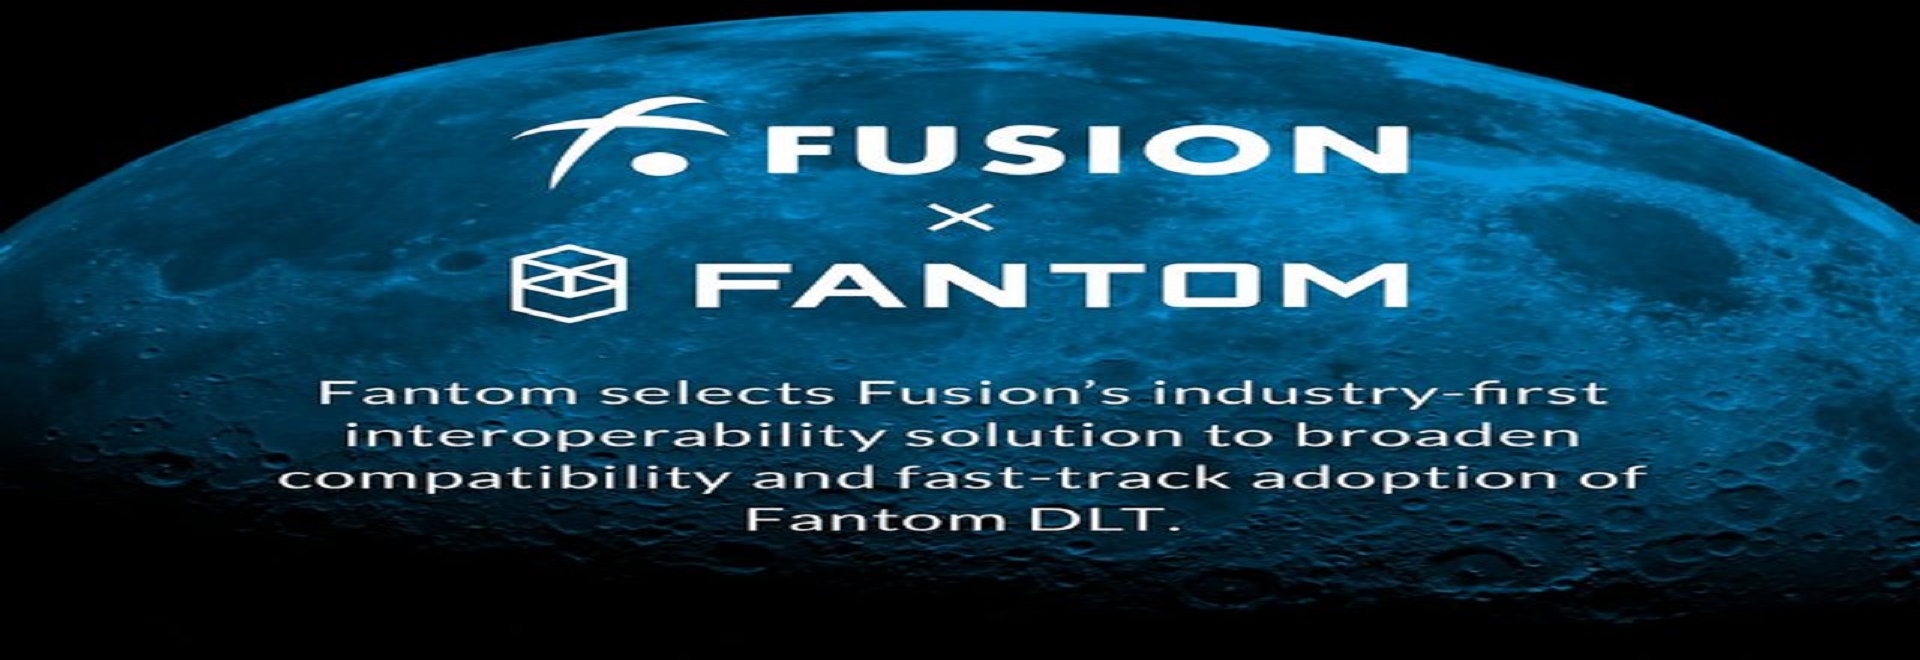 FfK uegN 1VZBOvMW51 52Gtr2pbi UGBZUj  KKiPE - Fantom Selects Fusion’s Industry